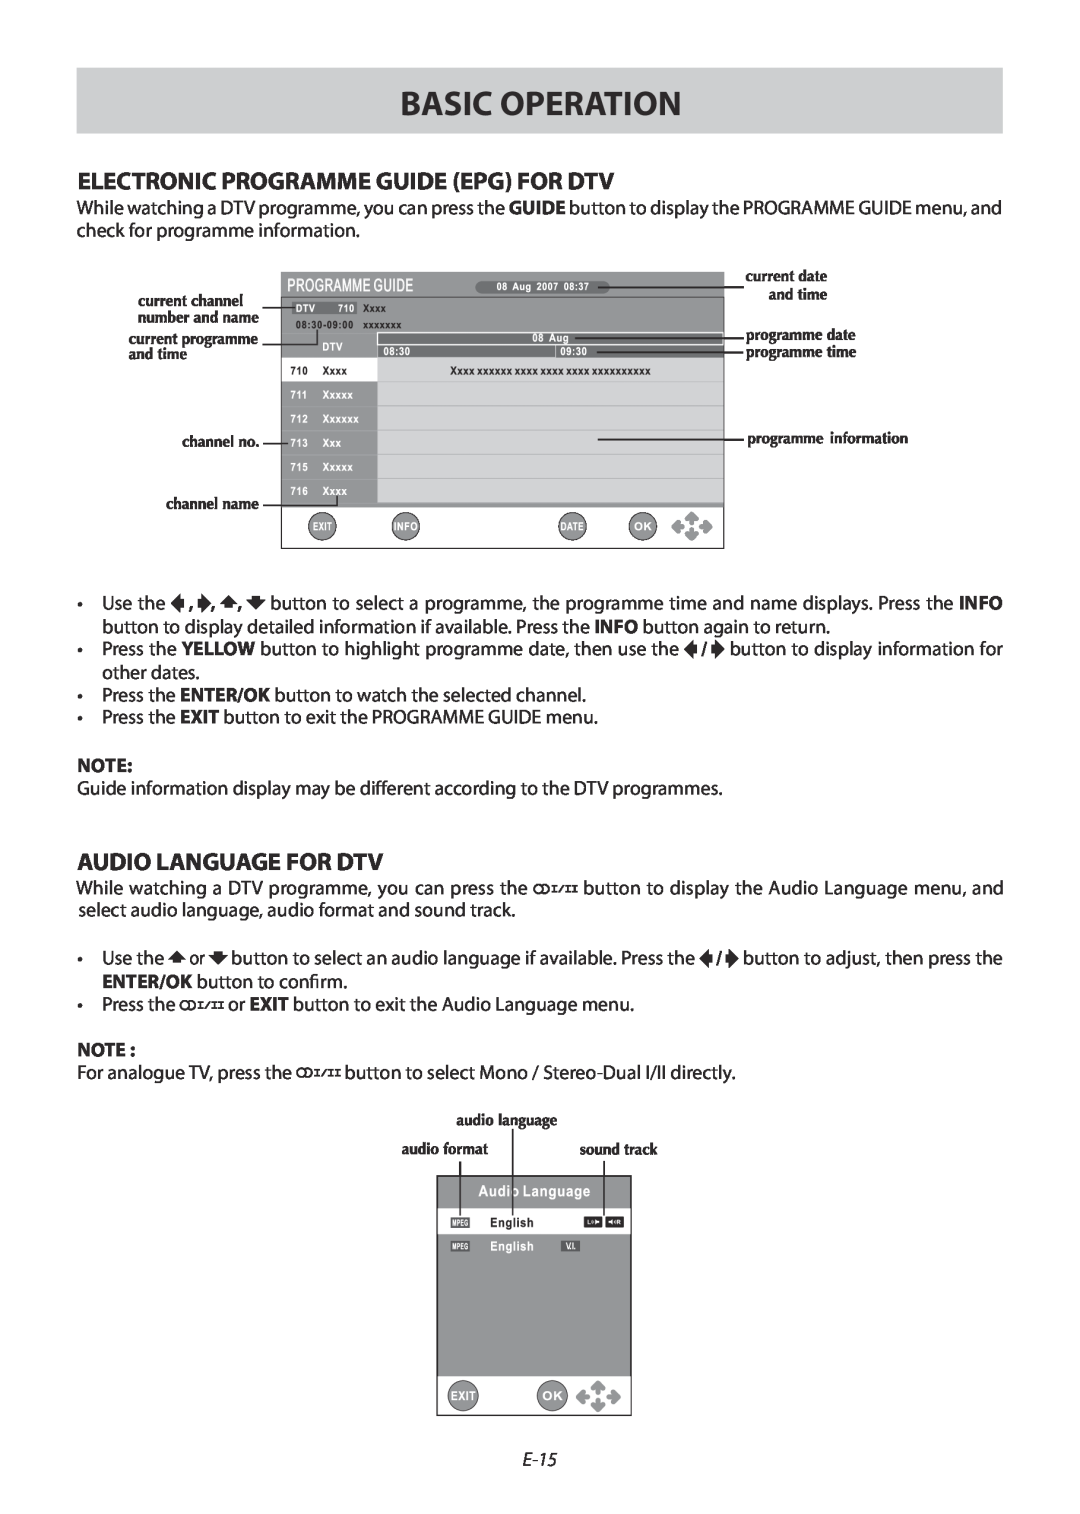 Technika 42-502 manual Electronic Programme Guide Epg For Dtv, Audio Language For Dtv, E-15, Basictvoperationsetup 